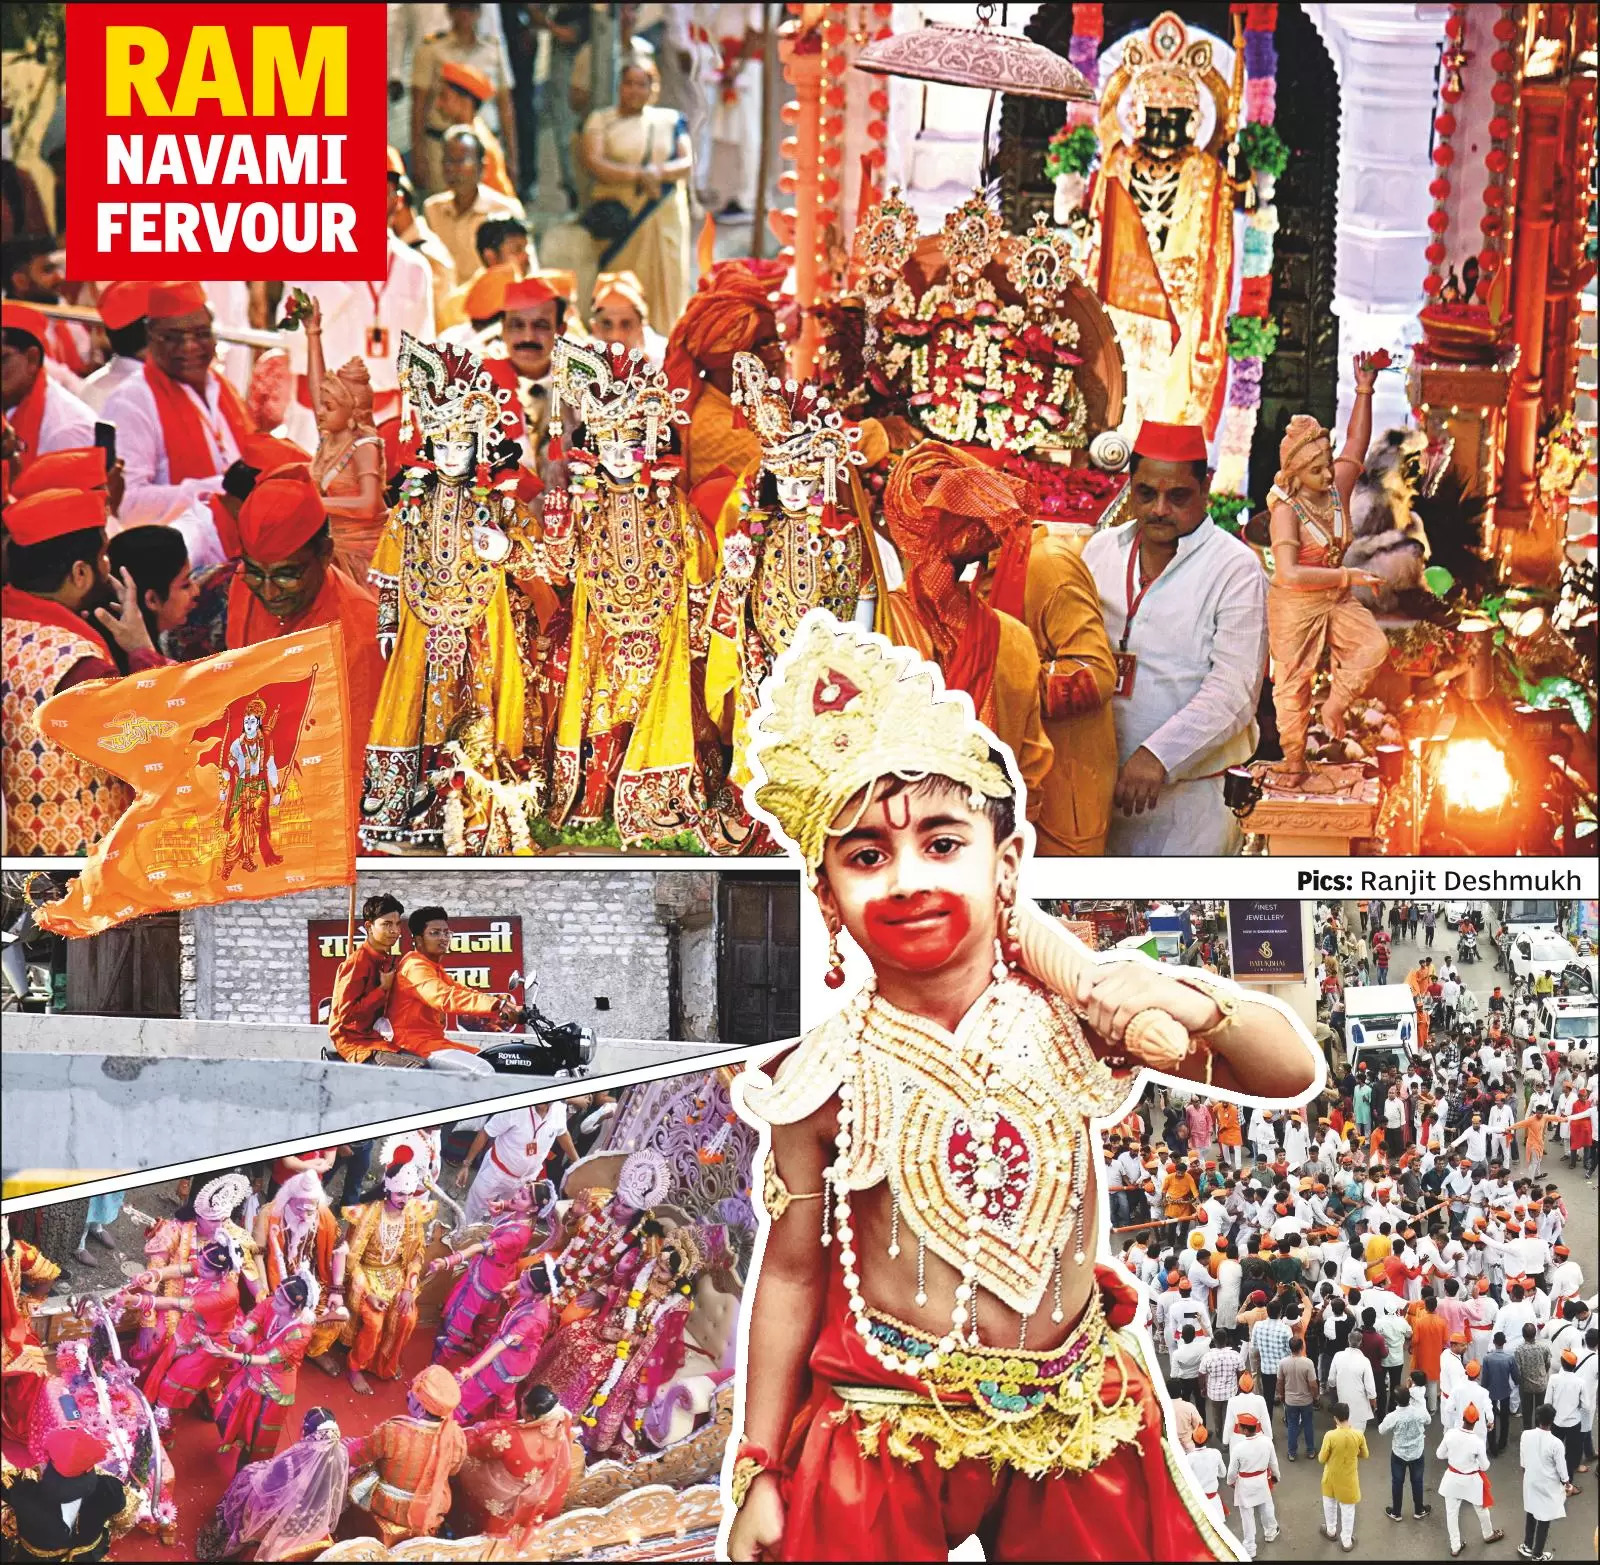 Garbas, tableaux, bhajan troupes & frenzied Ram chants keep spirit divine